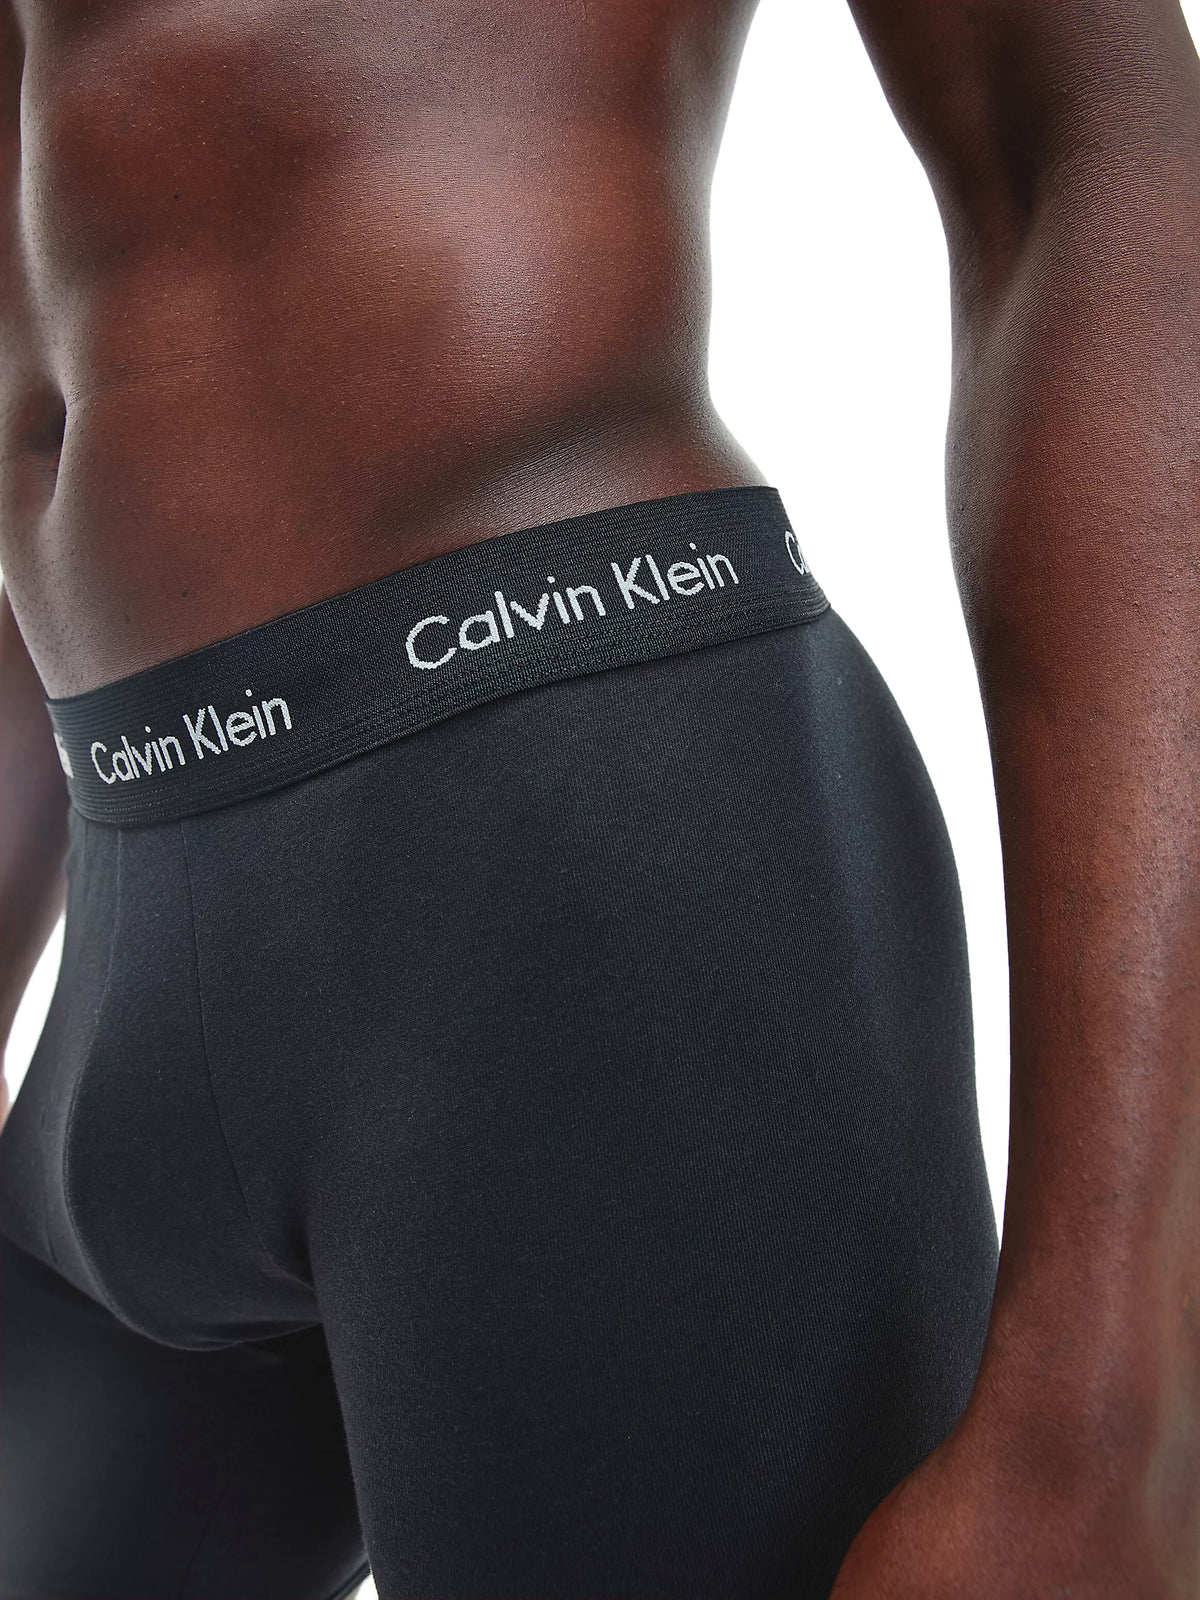 Calvin Klein Mens Boxer Briefs - Classic Fit (3-Pack), 04, Nb1770A, Black/Black/Black